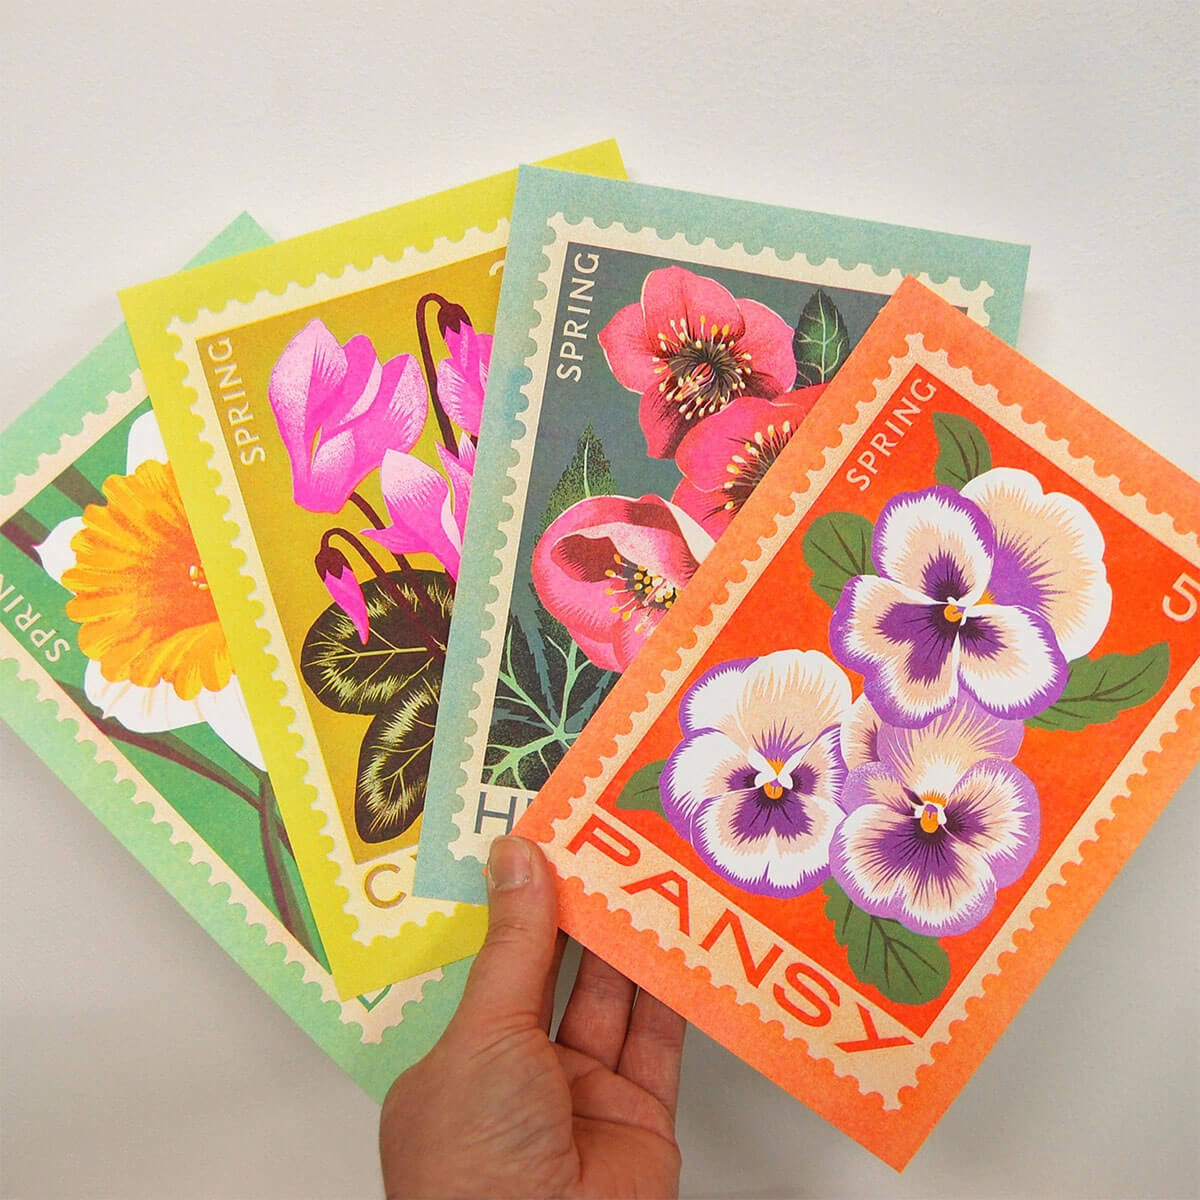 Flower stamp art print series by printer johnson